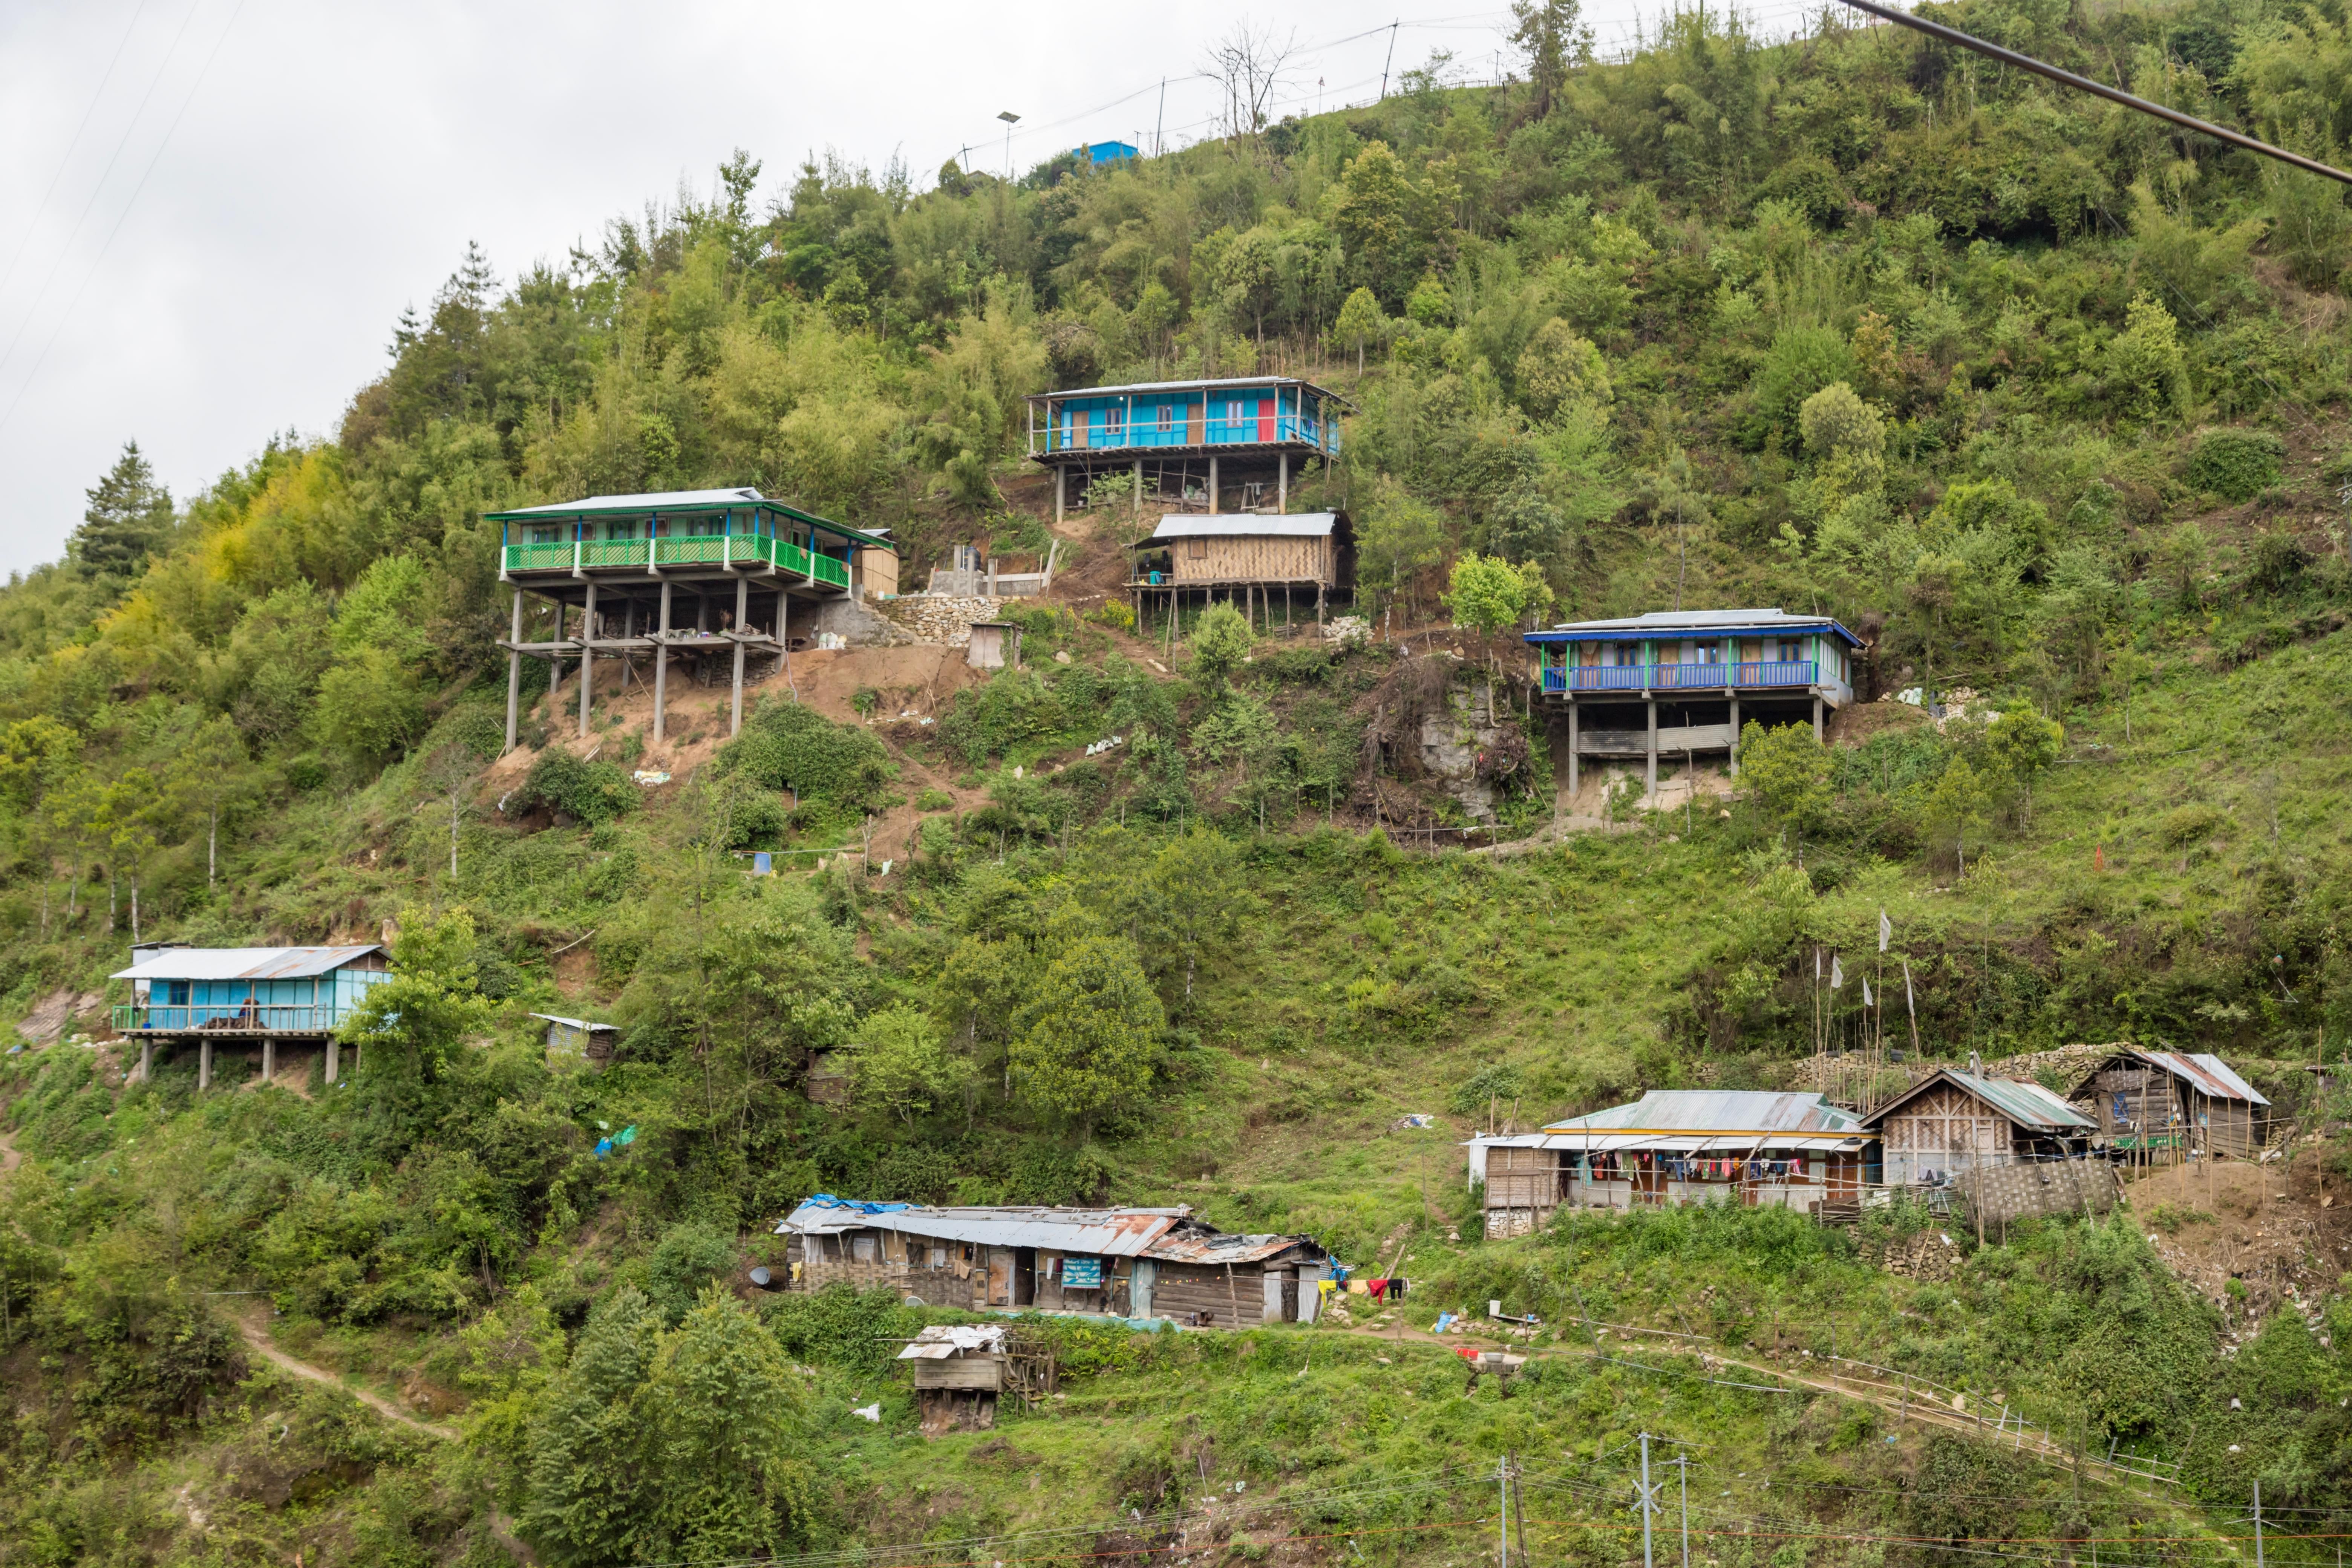 Things to Do in Arunachal Pradesh